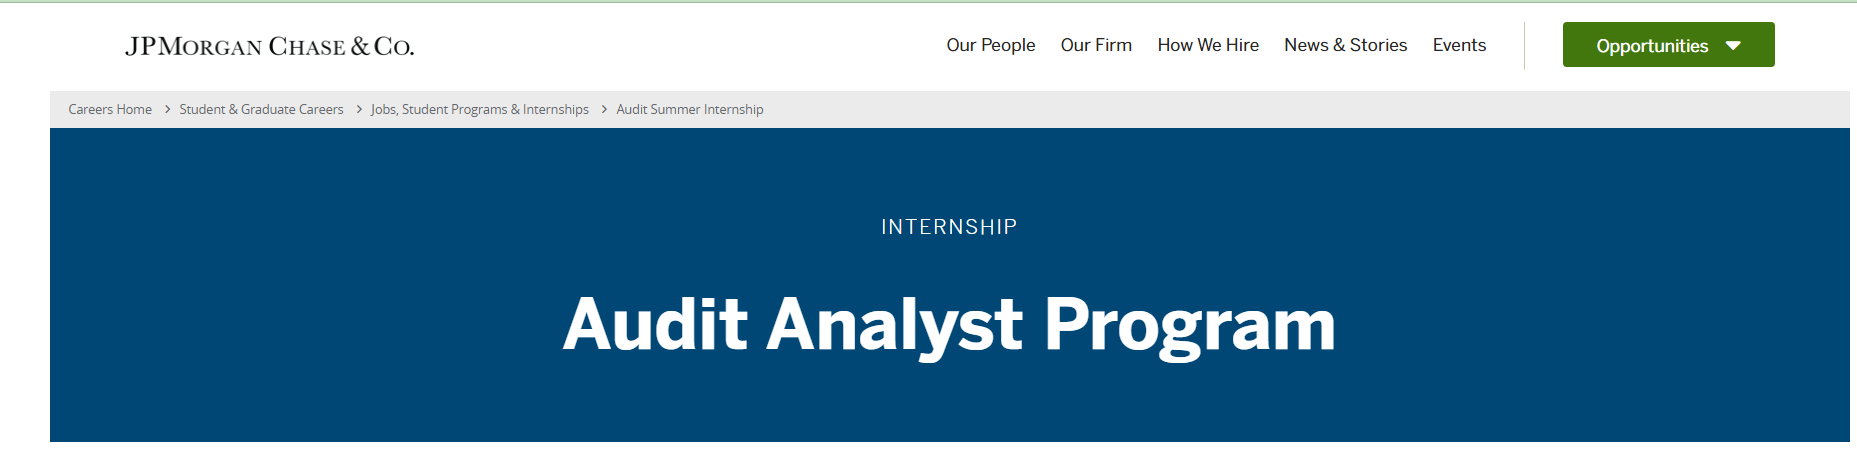 Internal Audit Summer Analyst Program